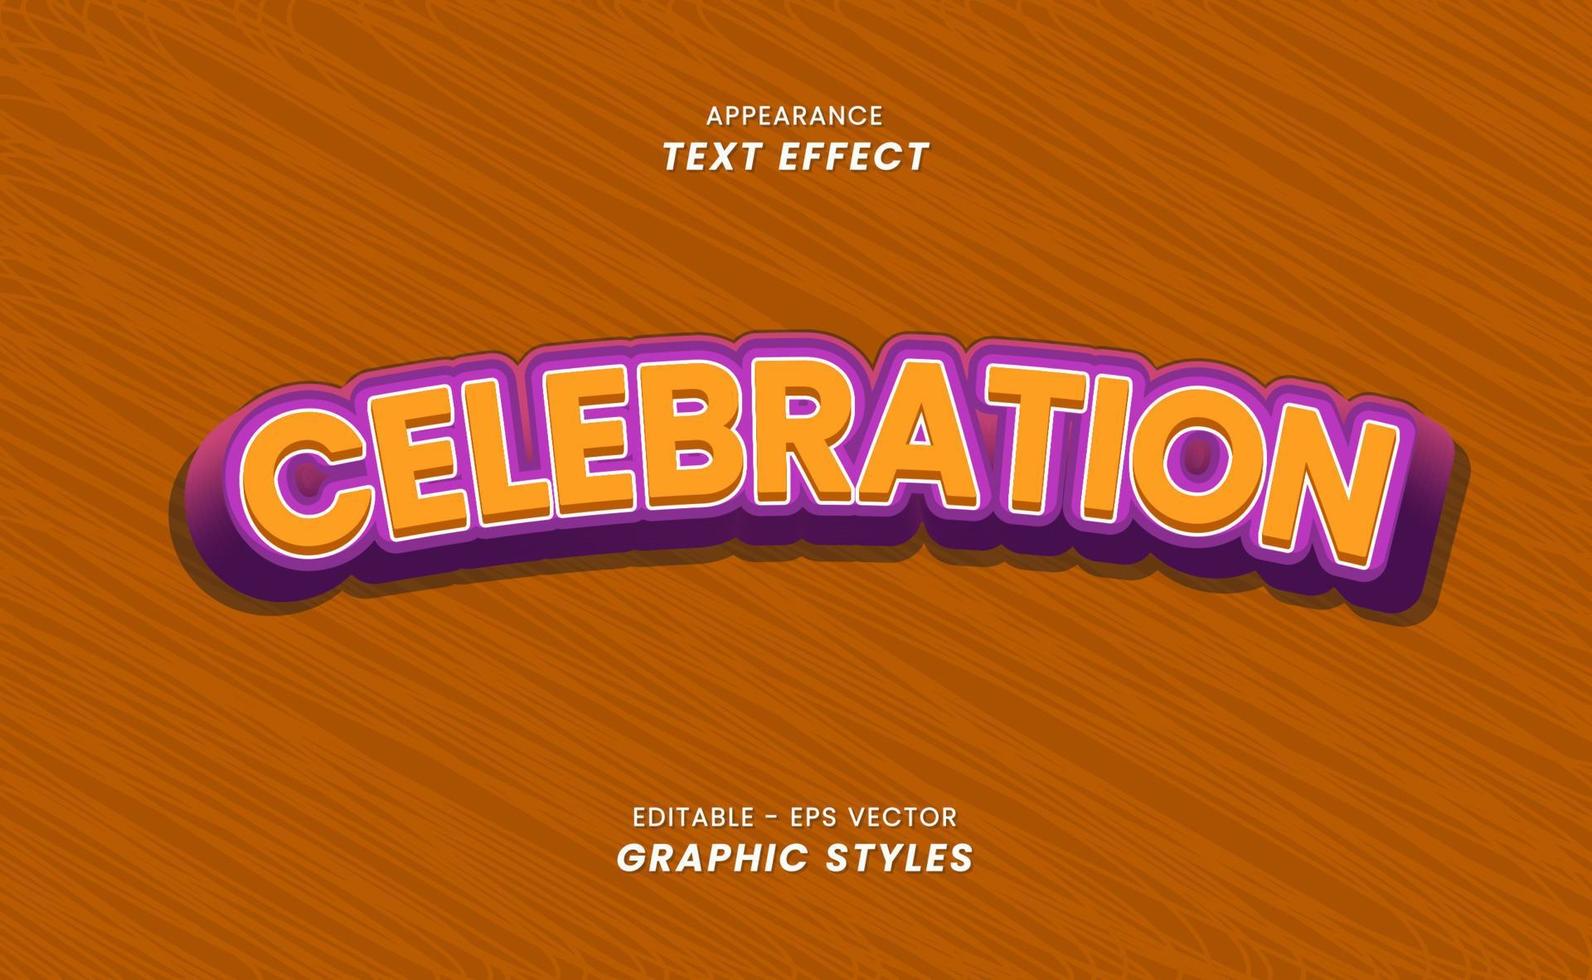 efectos de texto de apariencia: texto de celebración editable. estilos gráficos vector